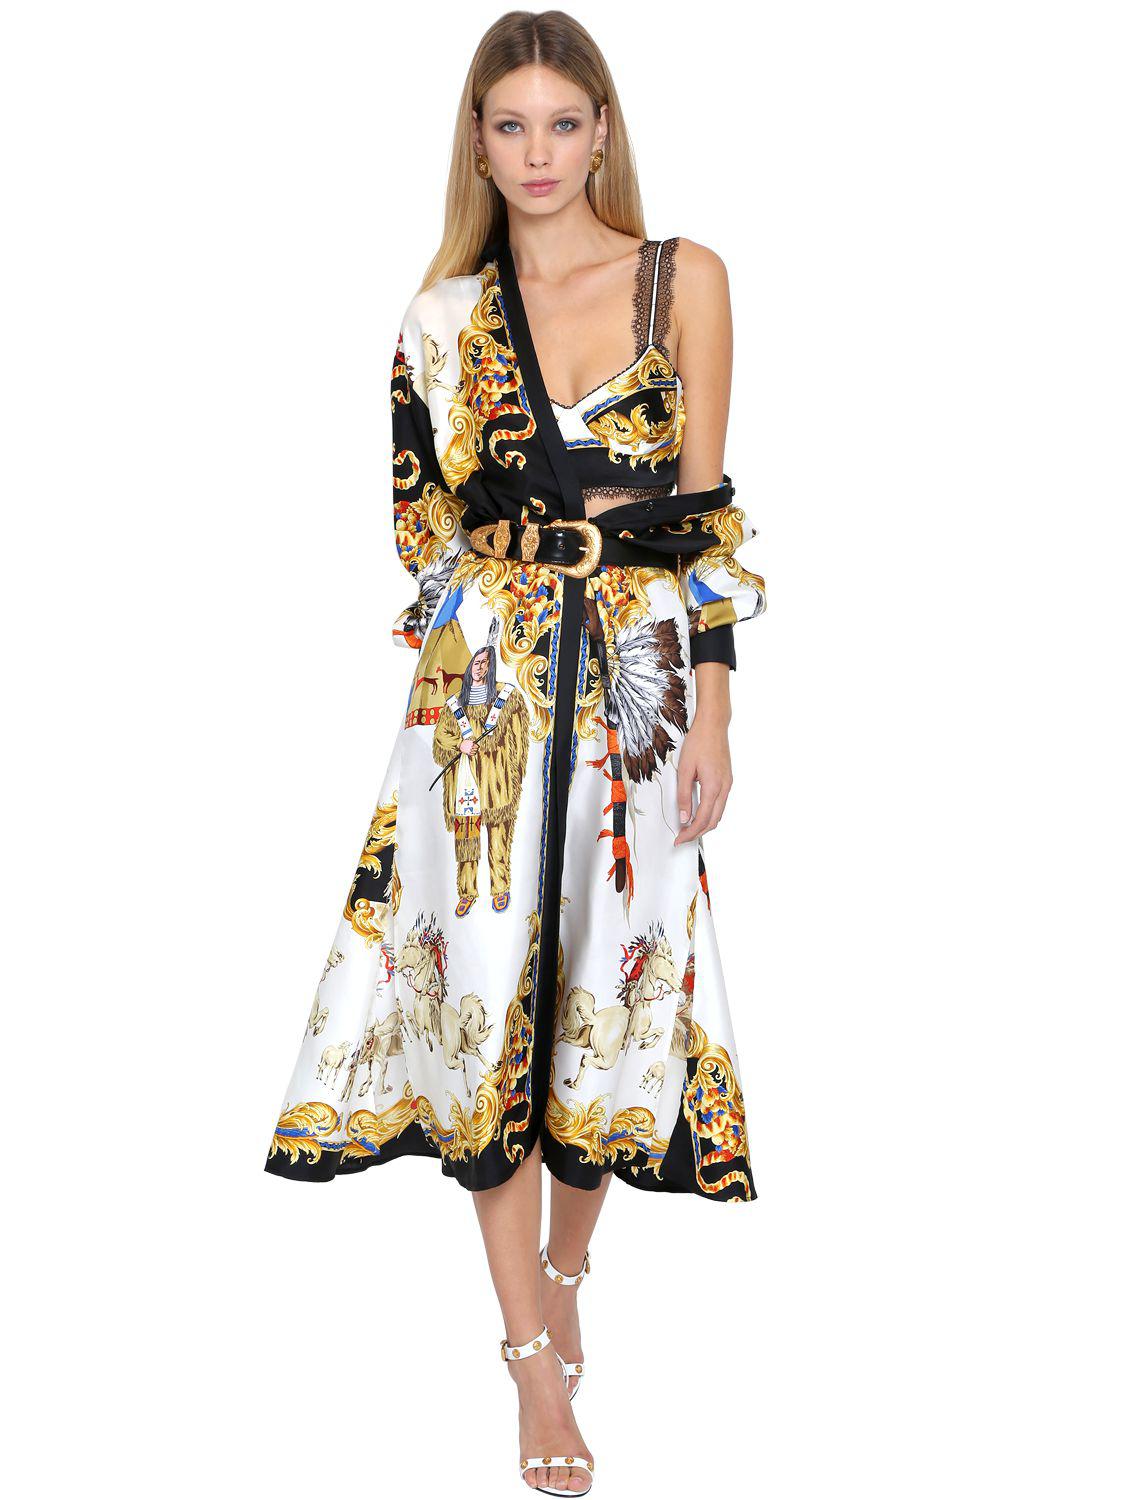 versace robe longue,OFF 66%,www.concordehotels.com.tr